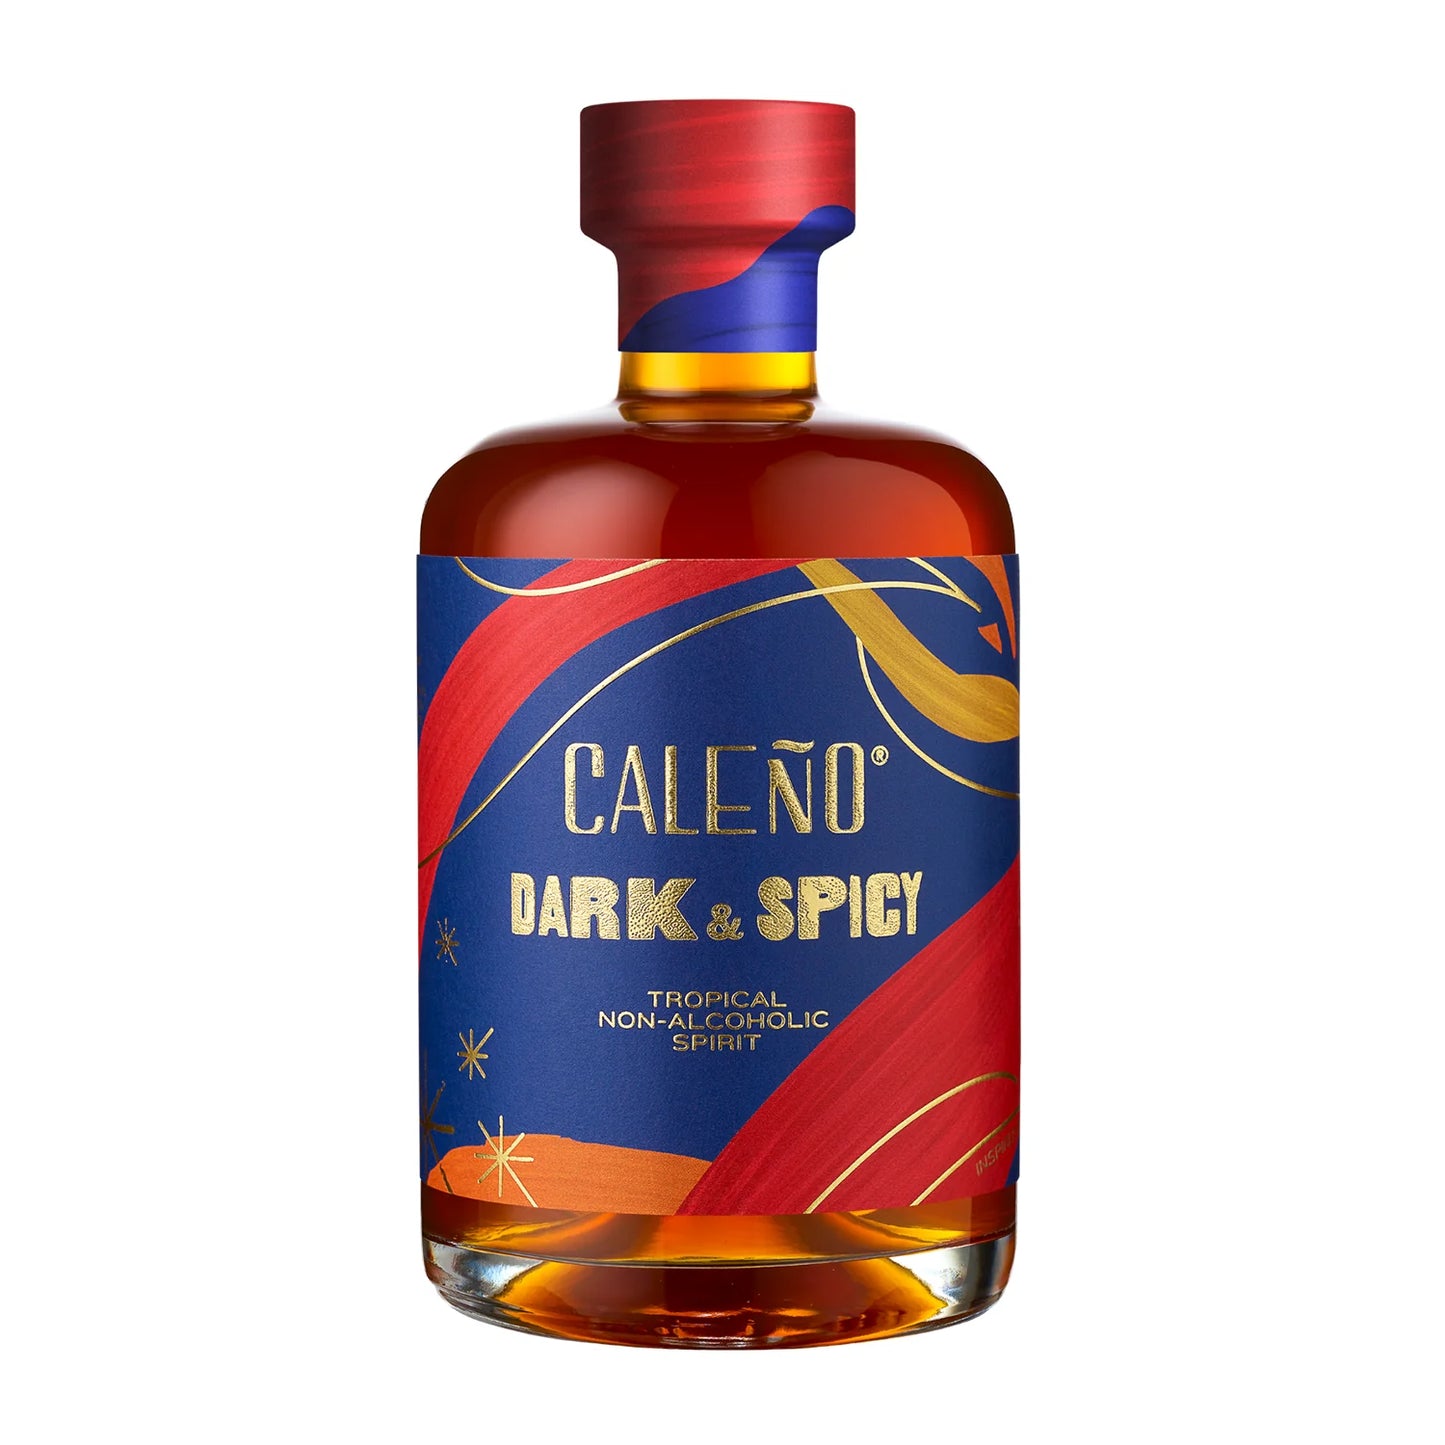 DARK & SPICY-NON-ALCOHOLIC SPIRIT